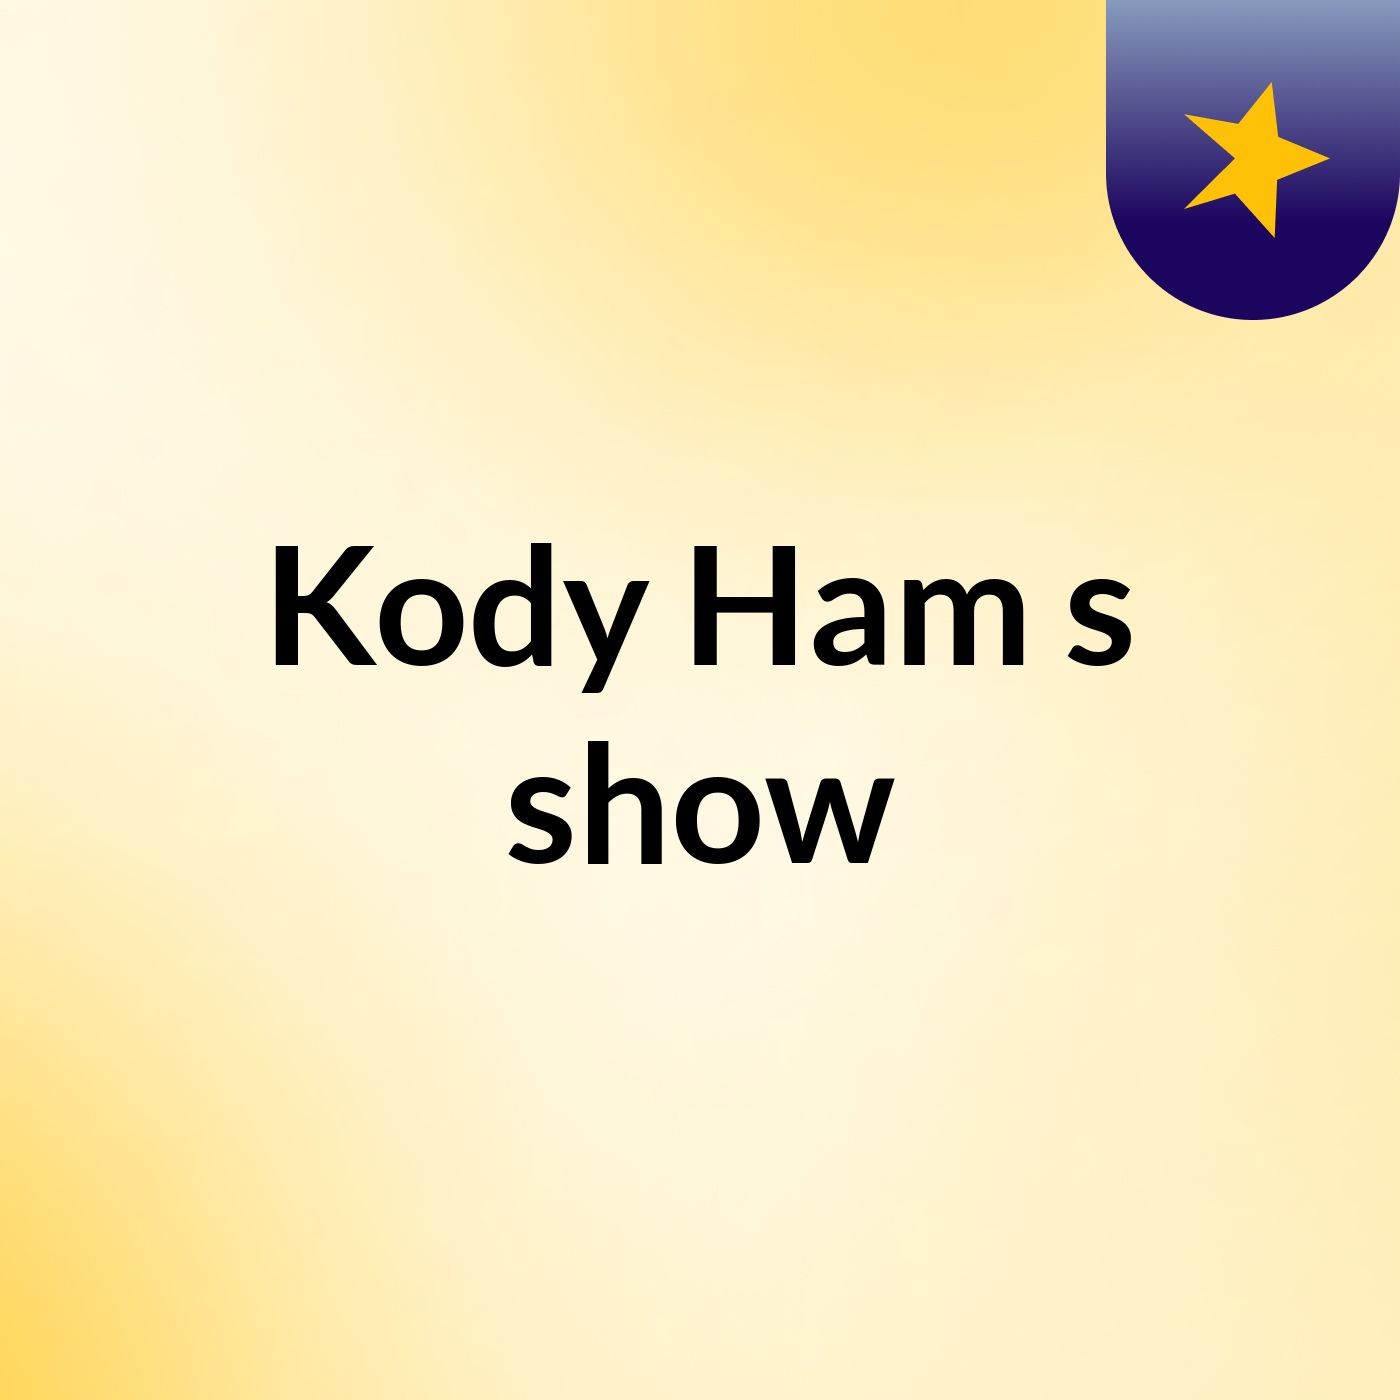 Kody Ham's show